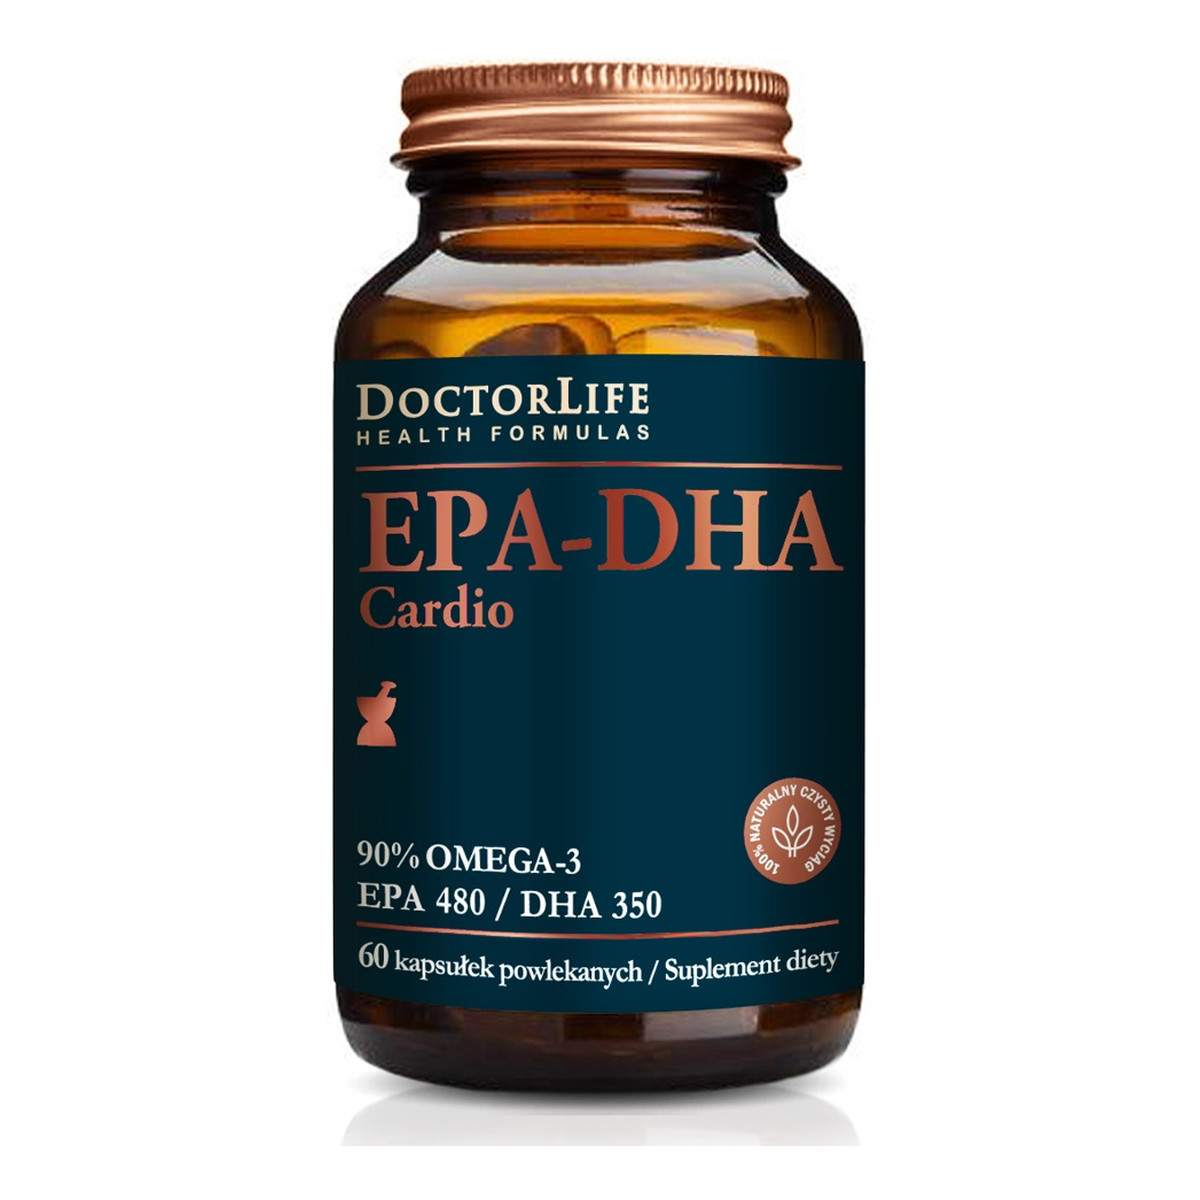 Doctor Life Epa-dha cardio 90% omega-3 epa 480/ dha 350 suplement diety 60 kapsułek